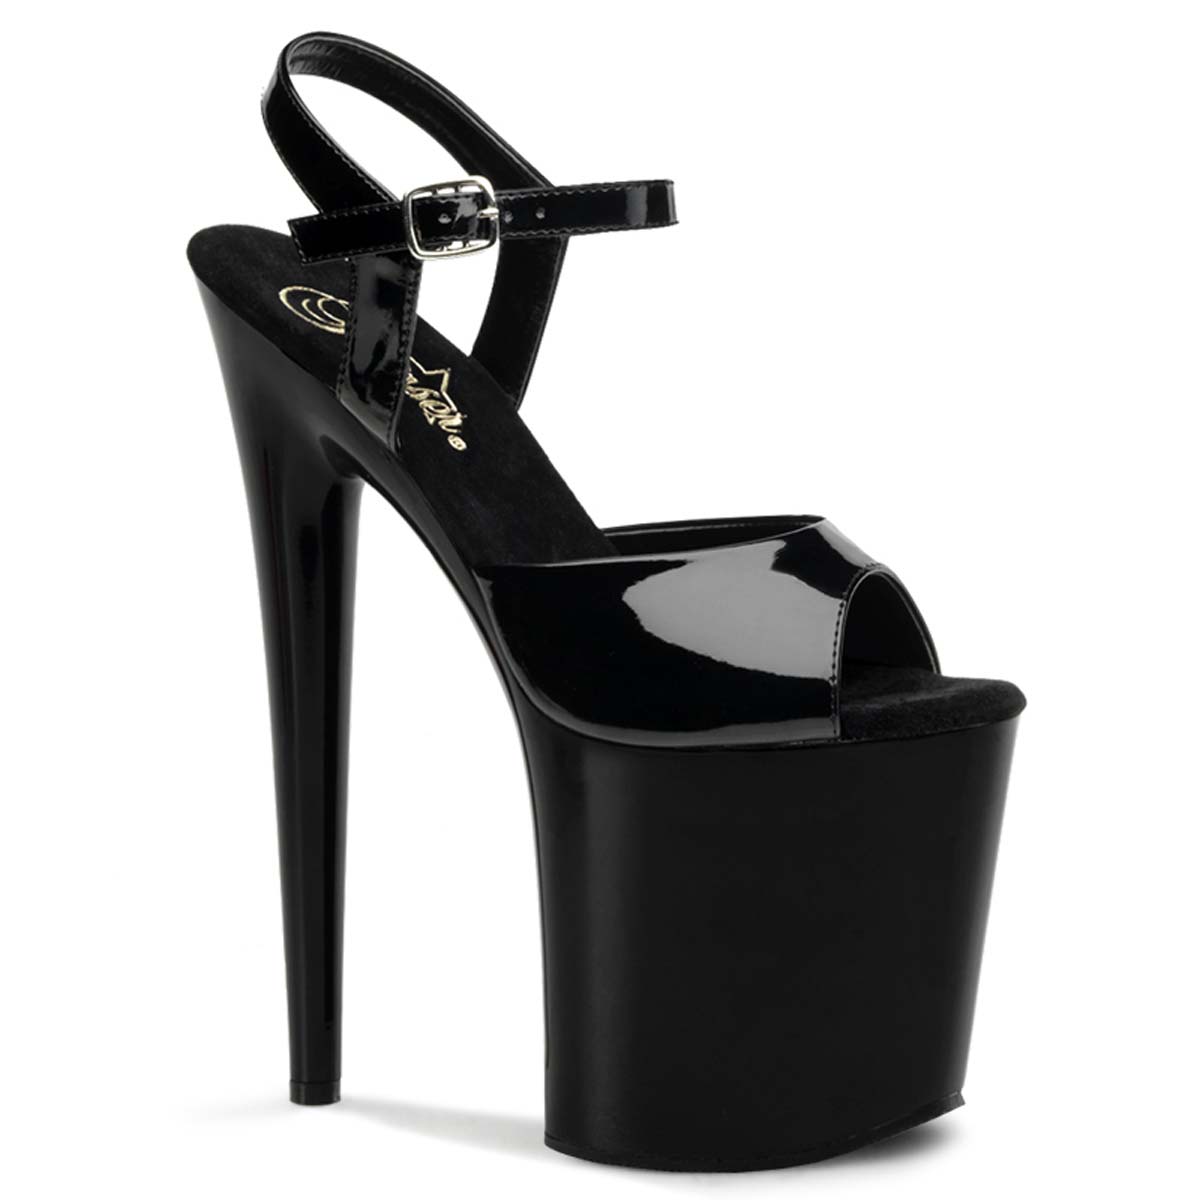 Pleaser Flamingo-809 Black/Black in Sexy Heels & Platforms - $59.95